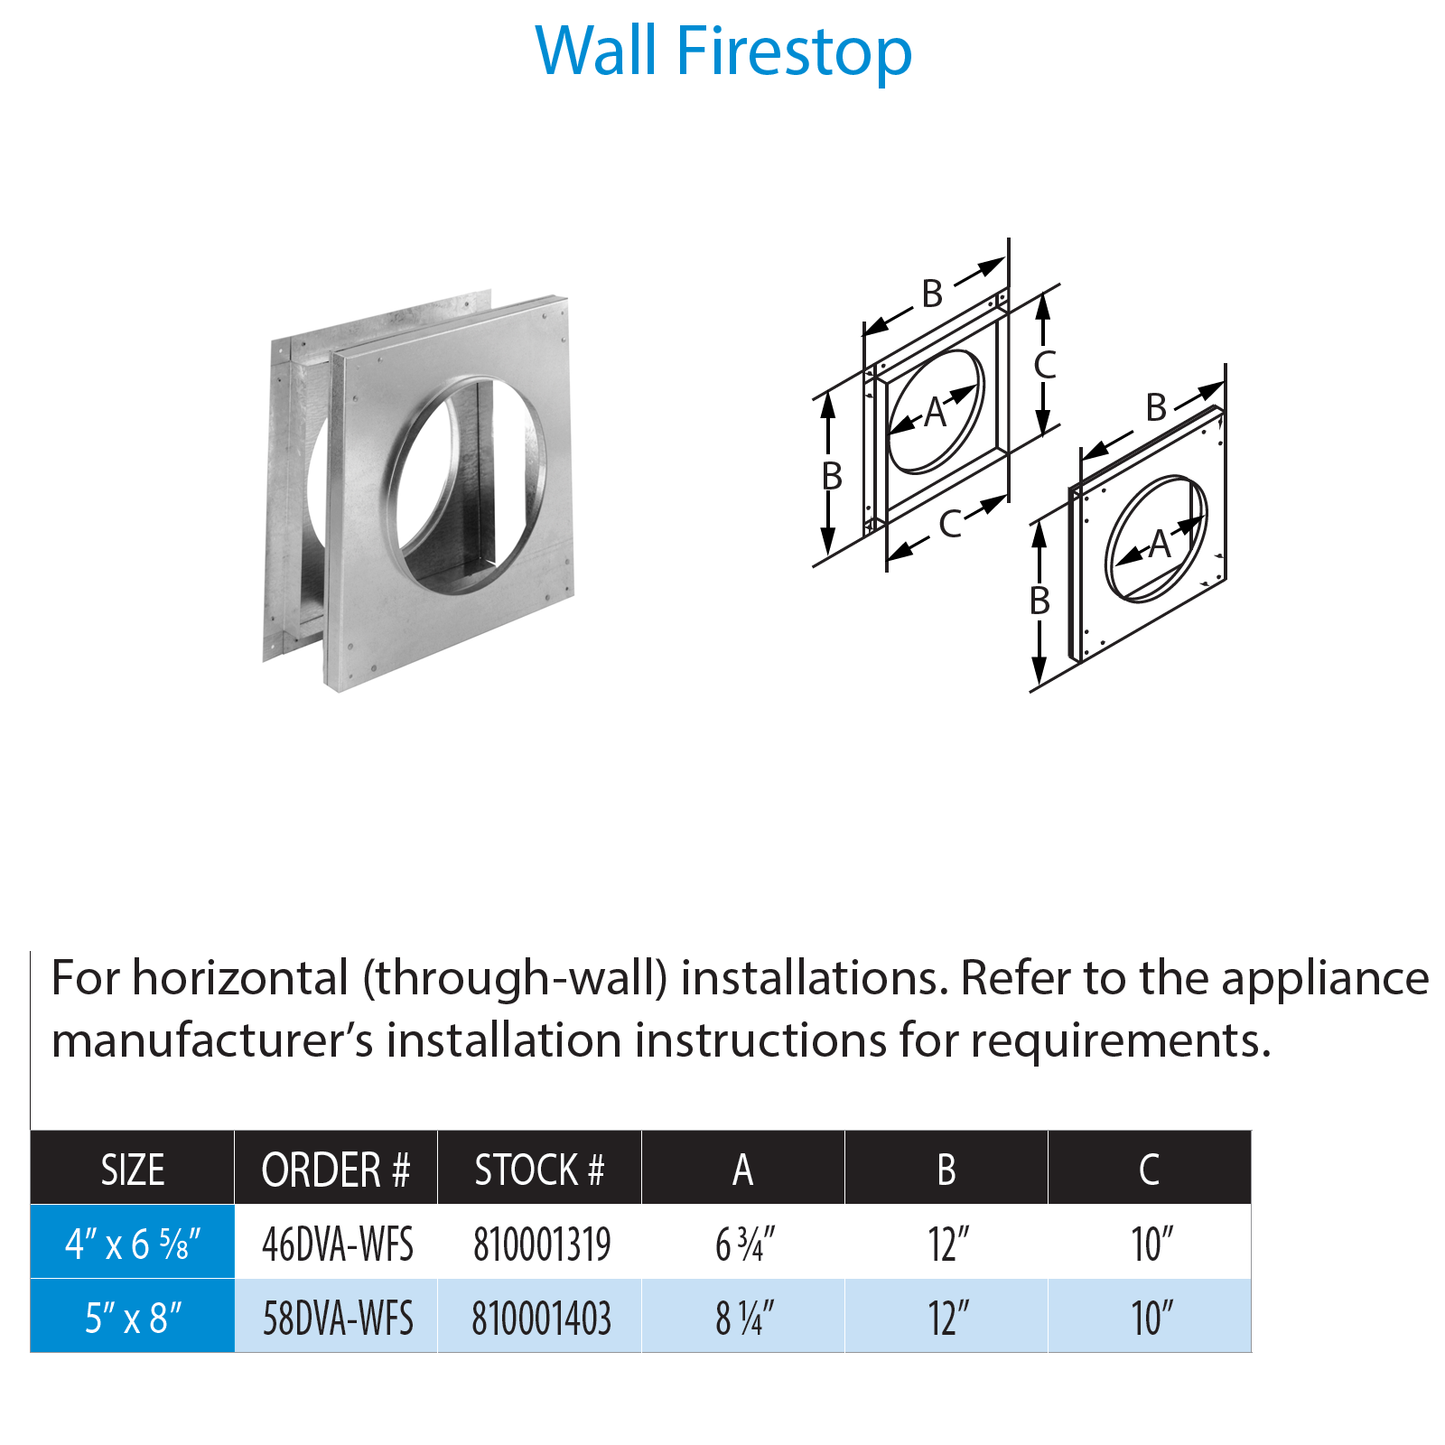 DuraVent DirectVent Pro Wall Firestop | 58DVA-WFS